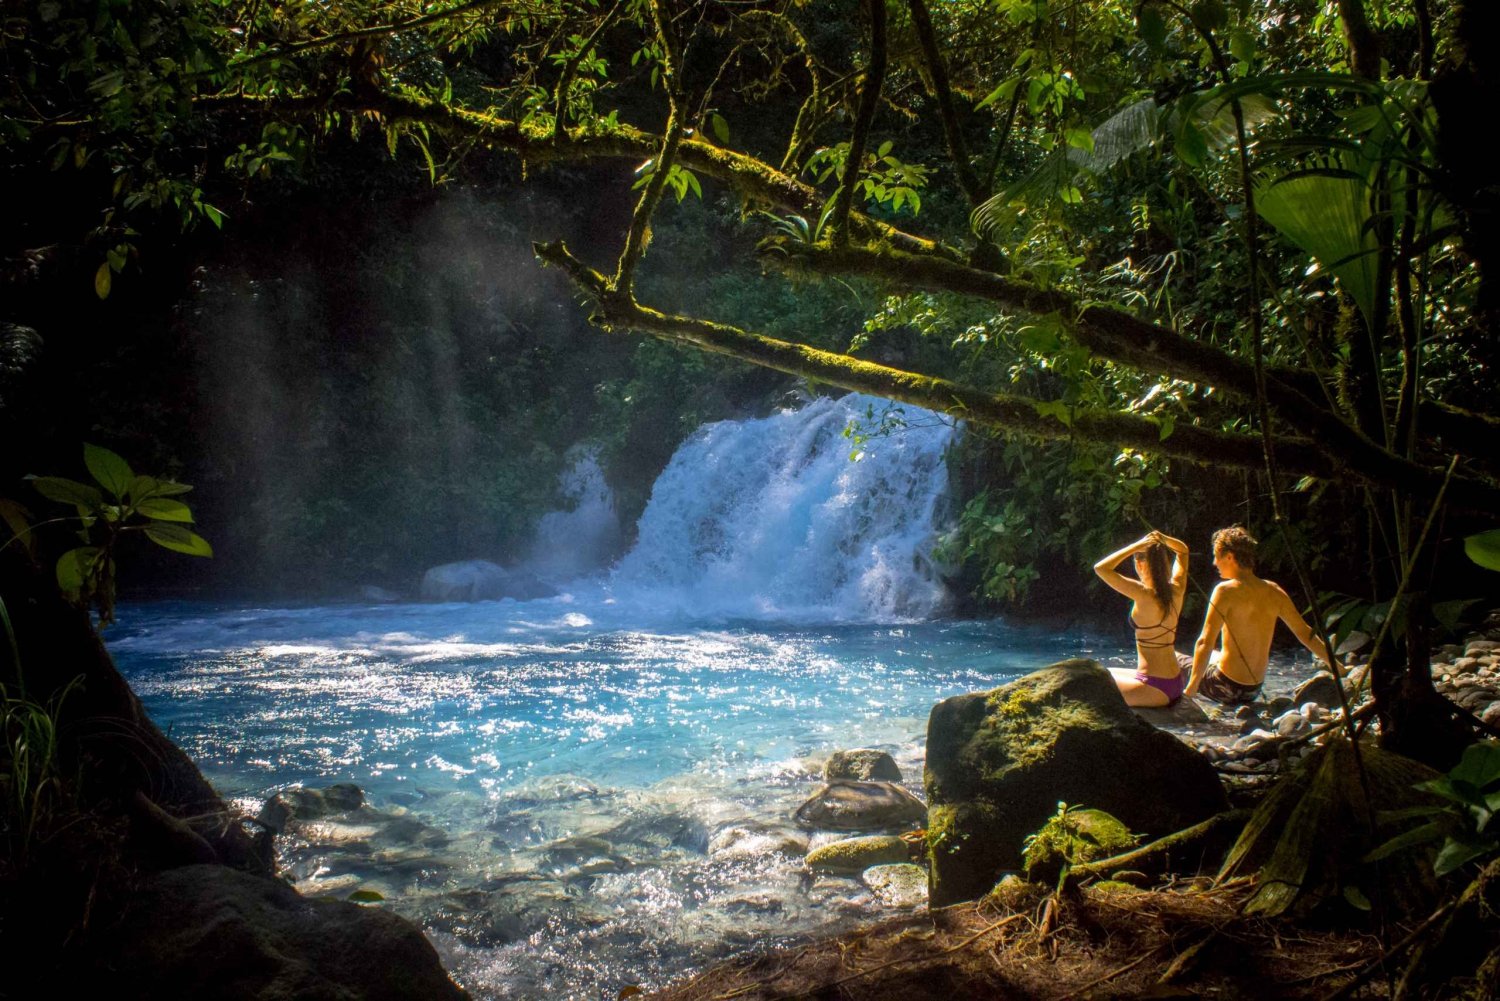 Guanacaste: Sensoria Rainforest Walking and Thermals Tour: Sensoria Rainforest Walking and Thermals Tour